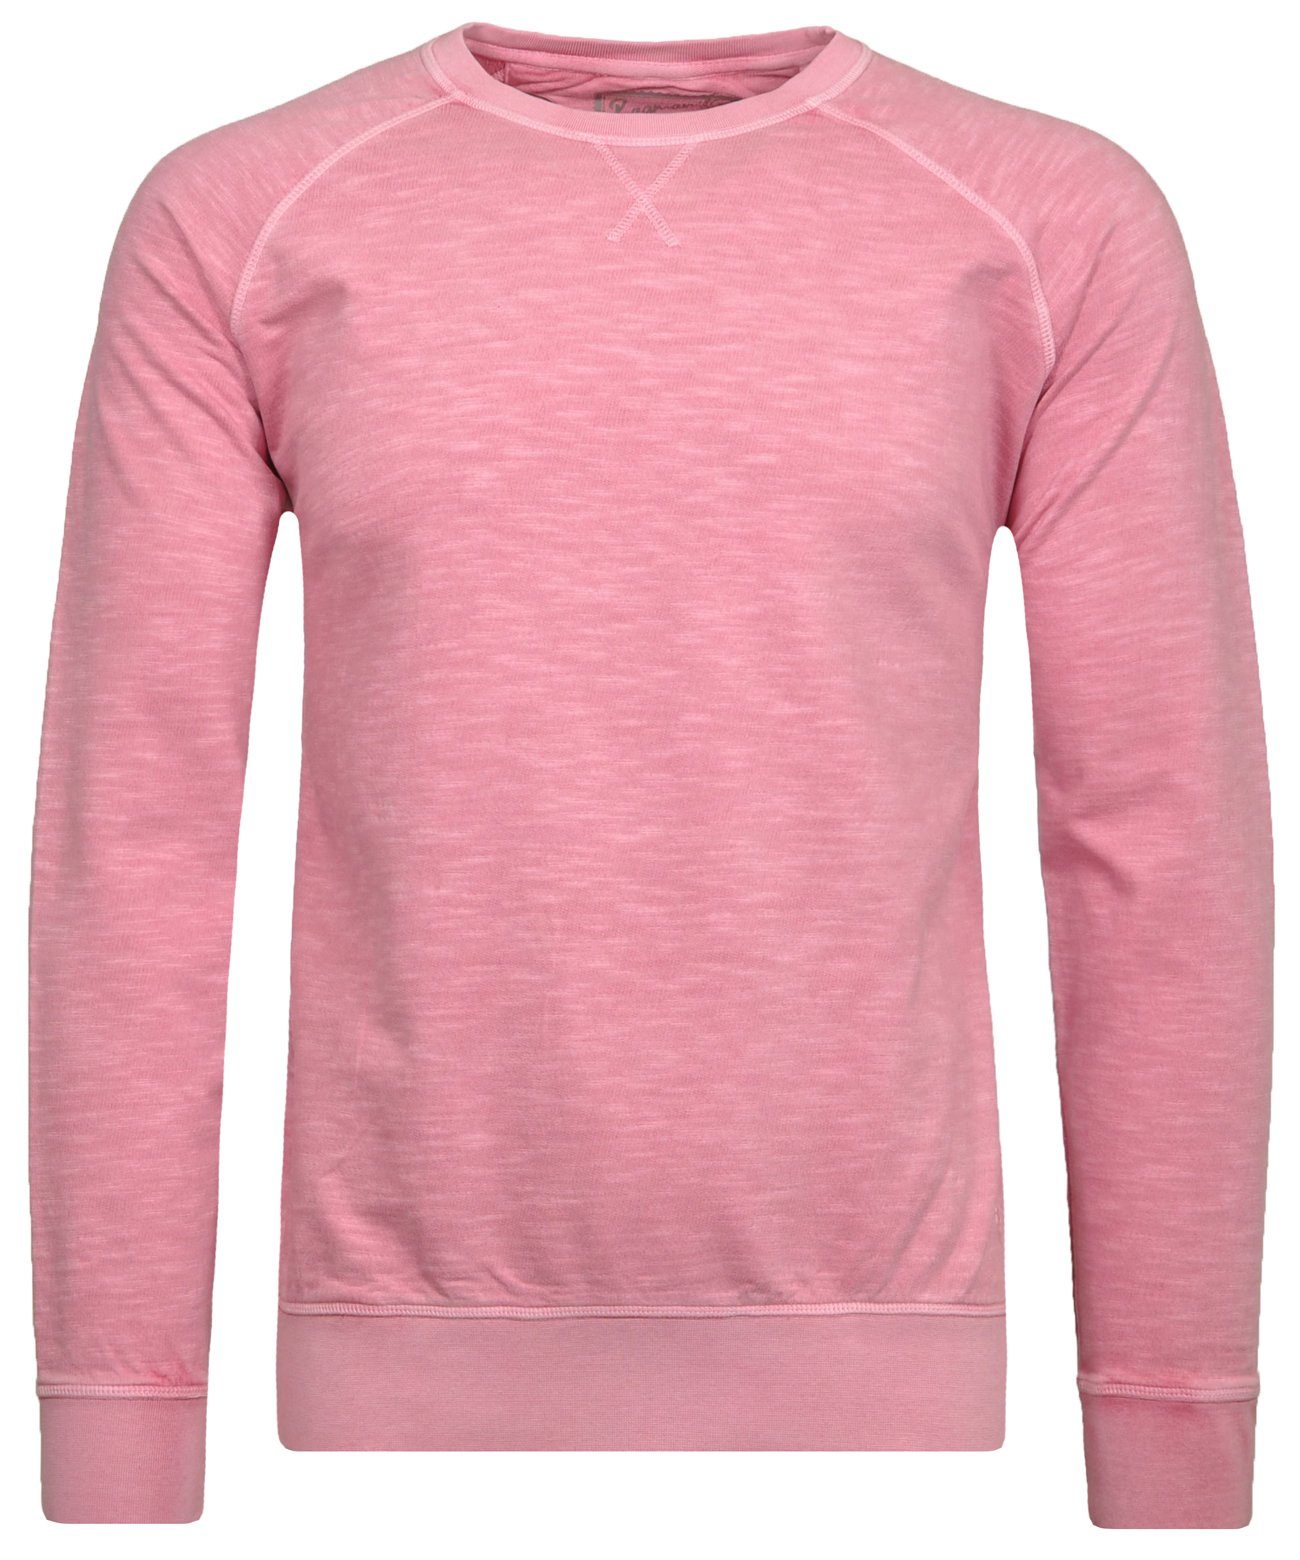 RAGMAN Sweatshirt Pink-641